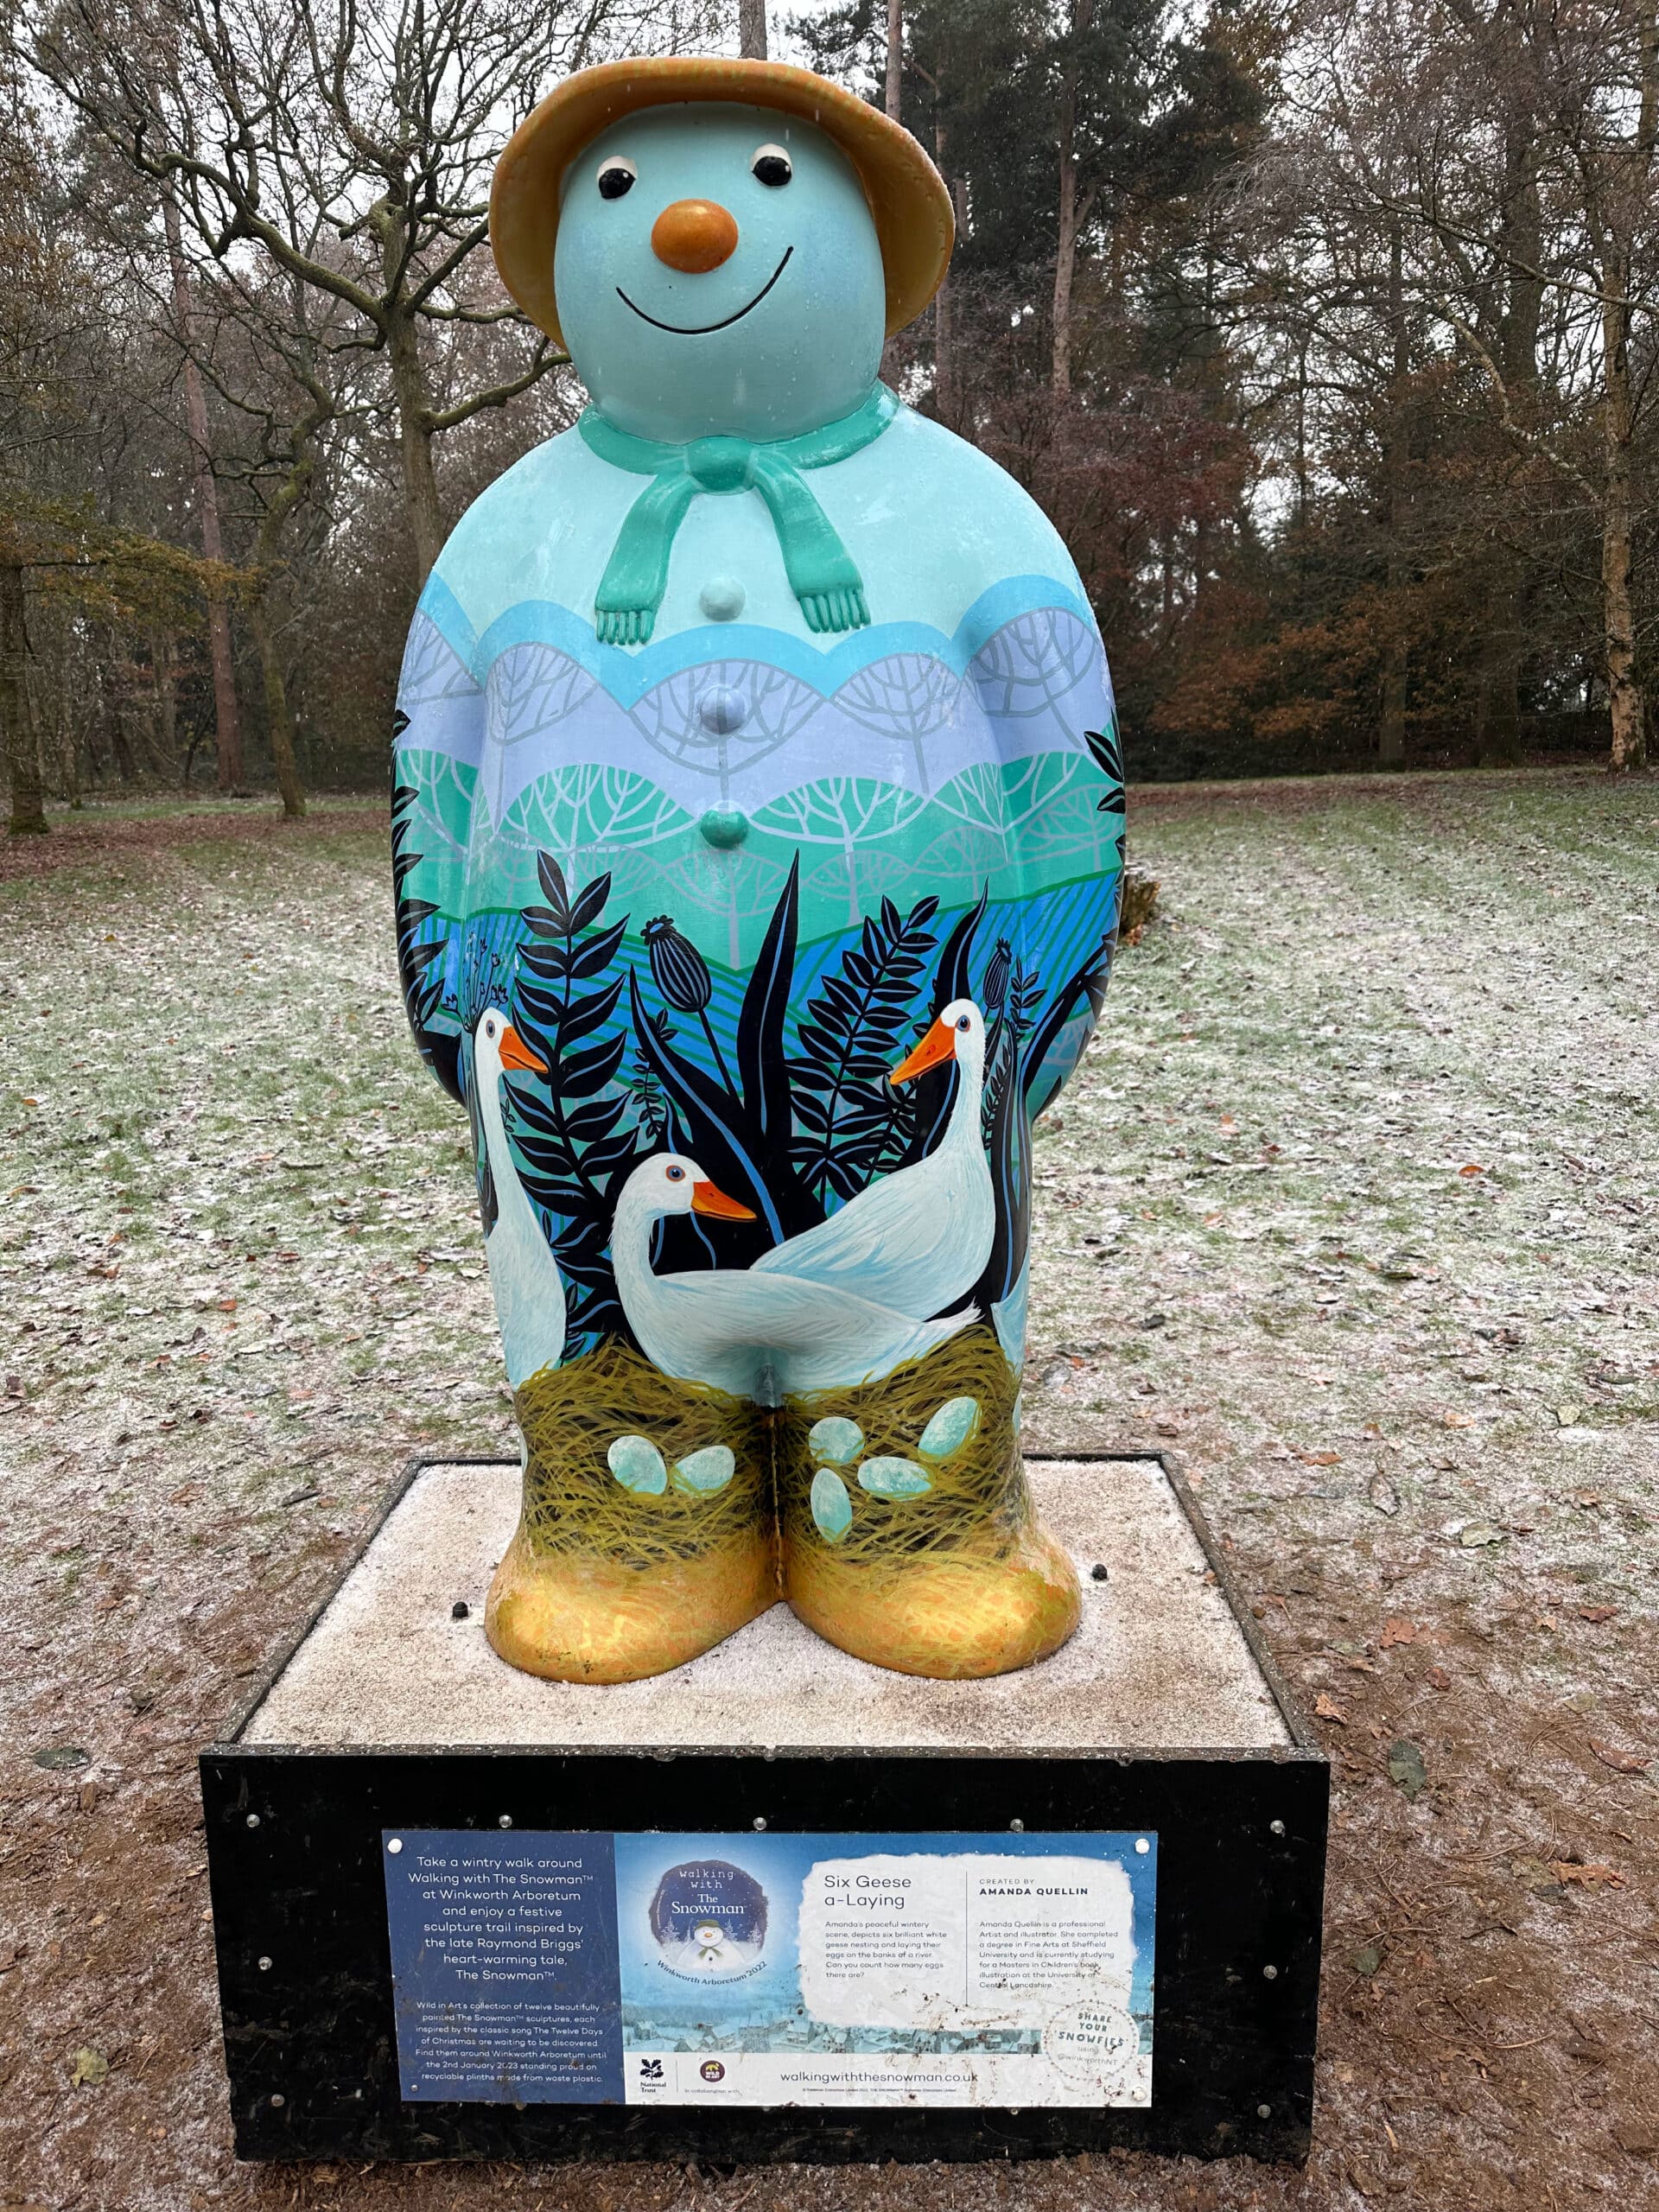 Snowman sculptures at wink worth Arboretum. 